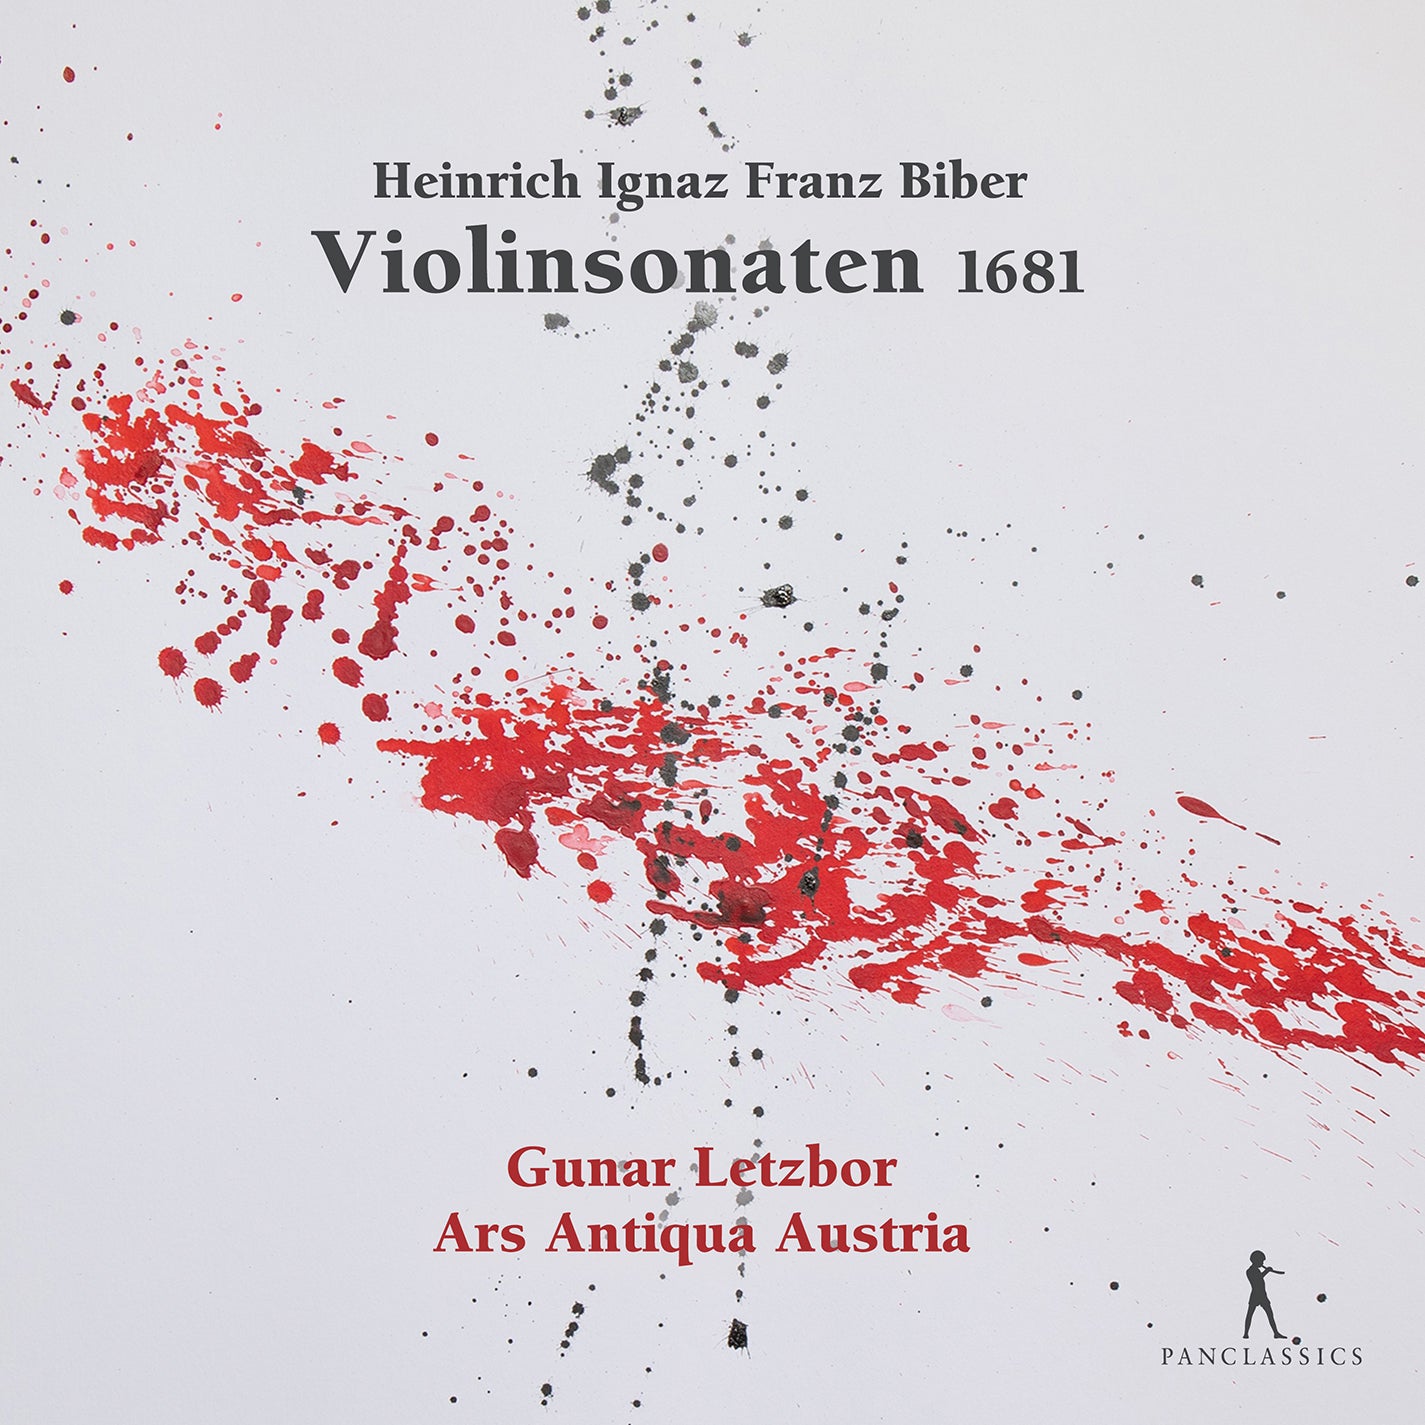 Heinrich Ignaz Franz Biber: Violin Sonatas (1681) / Ars Antiqua Austria